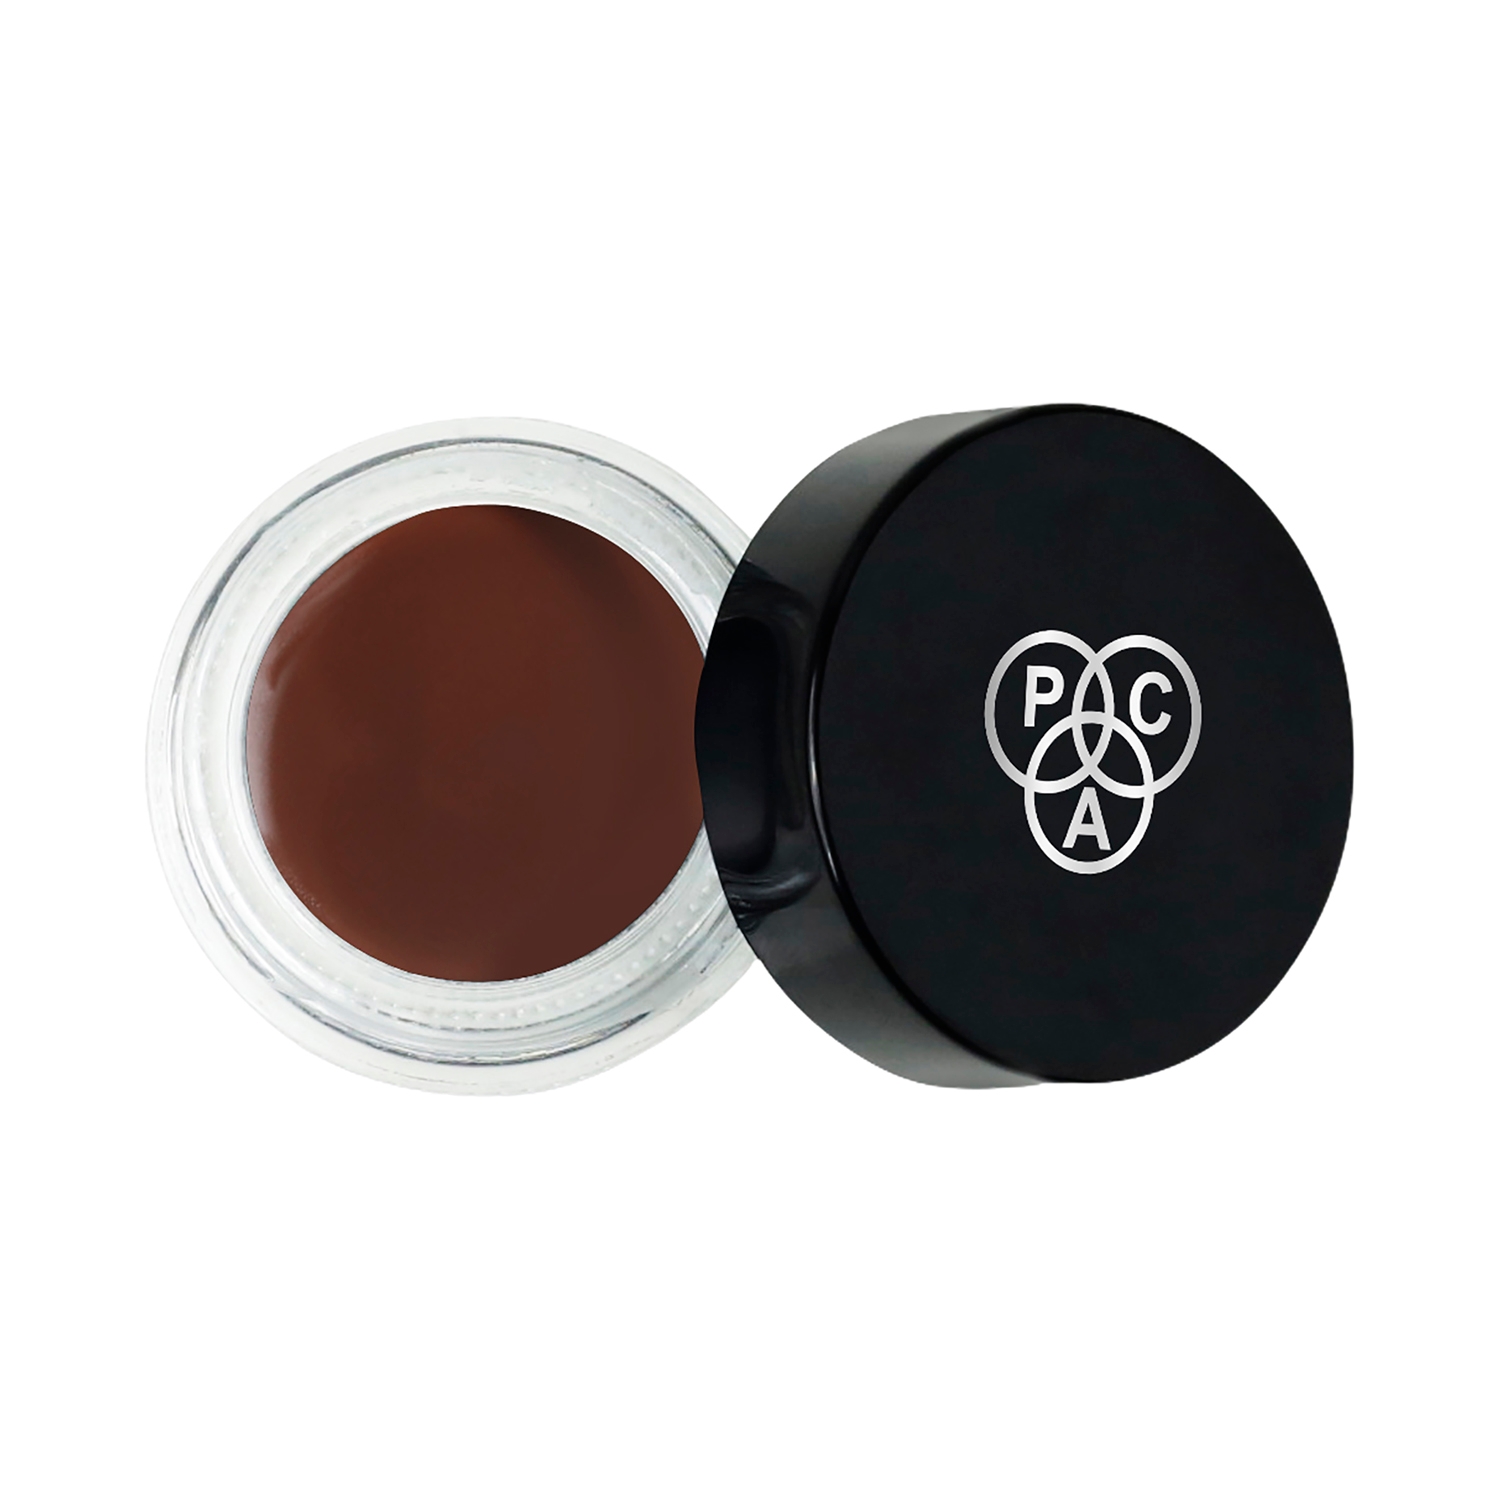 PAC Cream Eyeliner - Aqua Brown (6g)